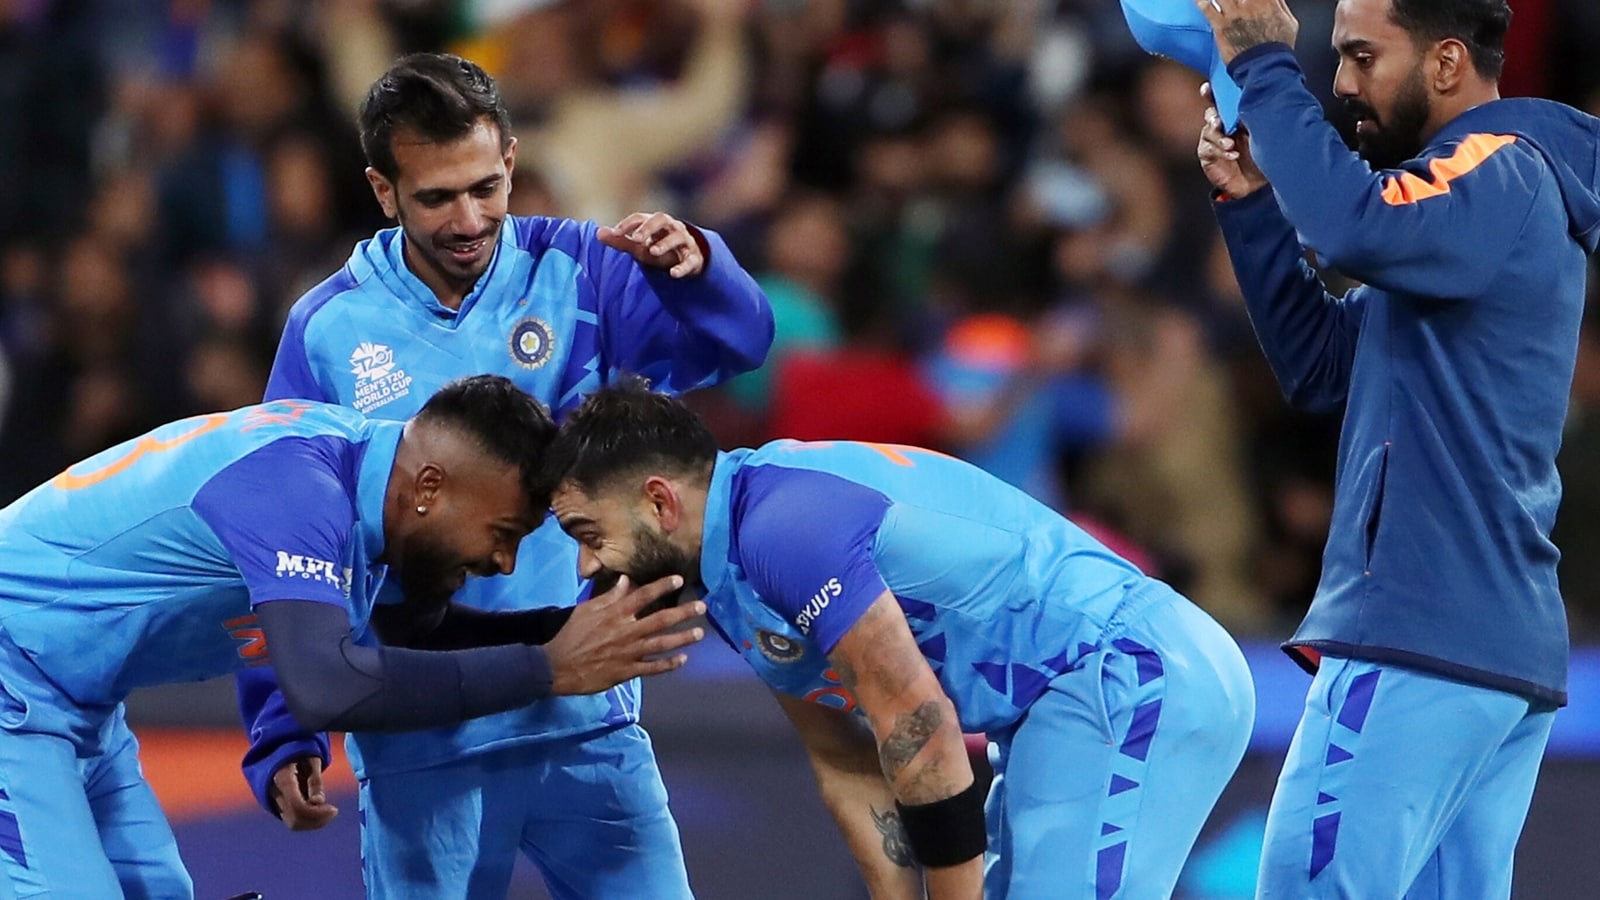 Watch: Kohli's teary-eyed, emotional celebration touches hearts after win vs PAK | Cricket - Hindustan Times